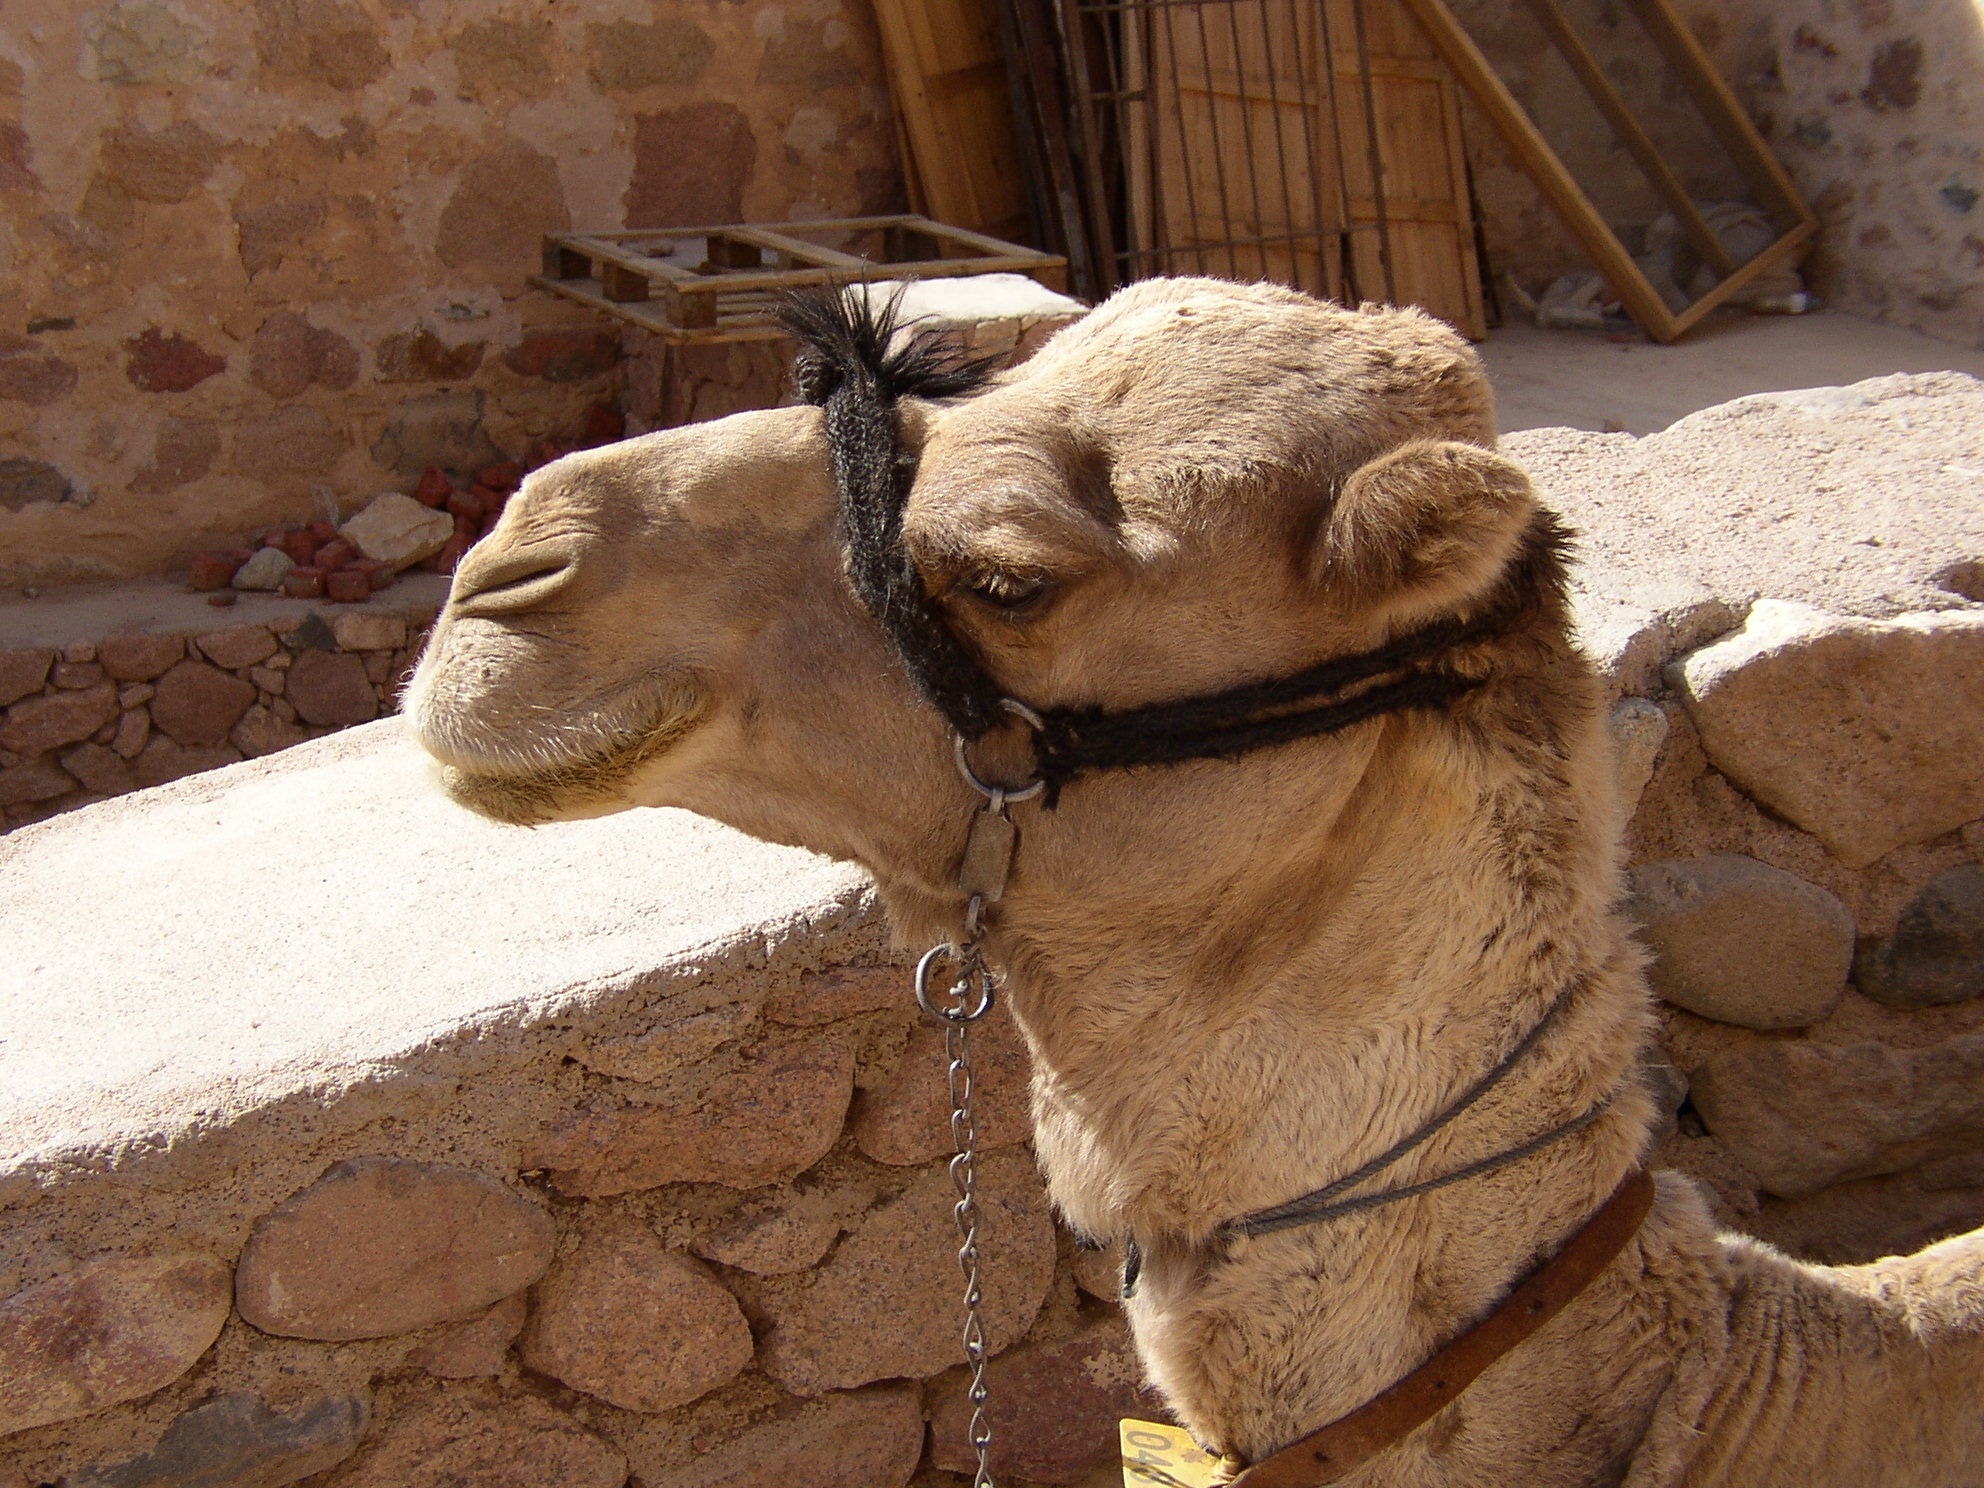 brown camel